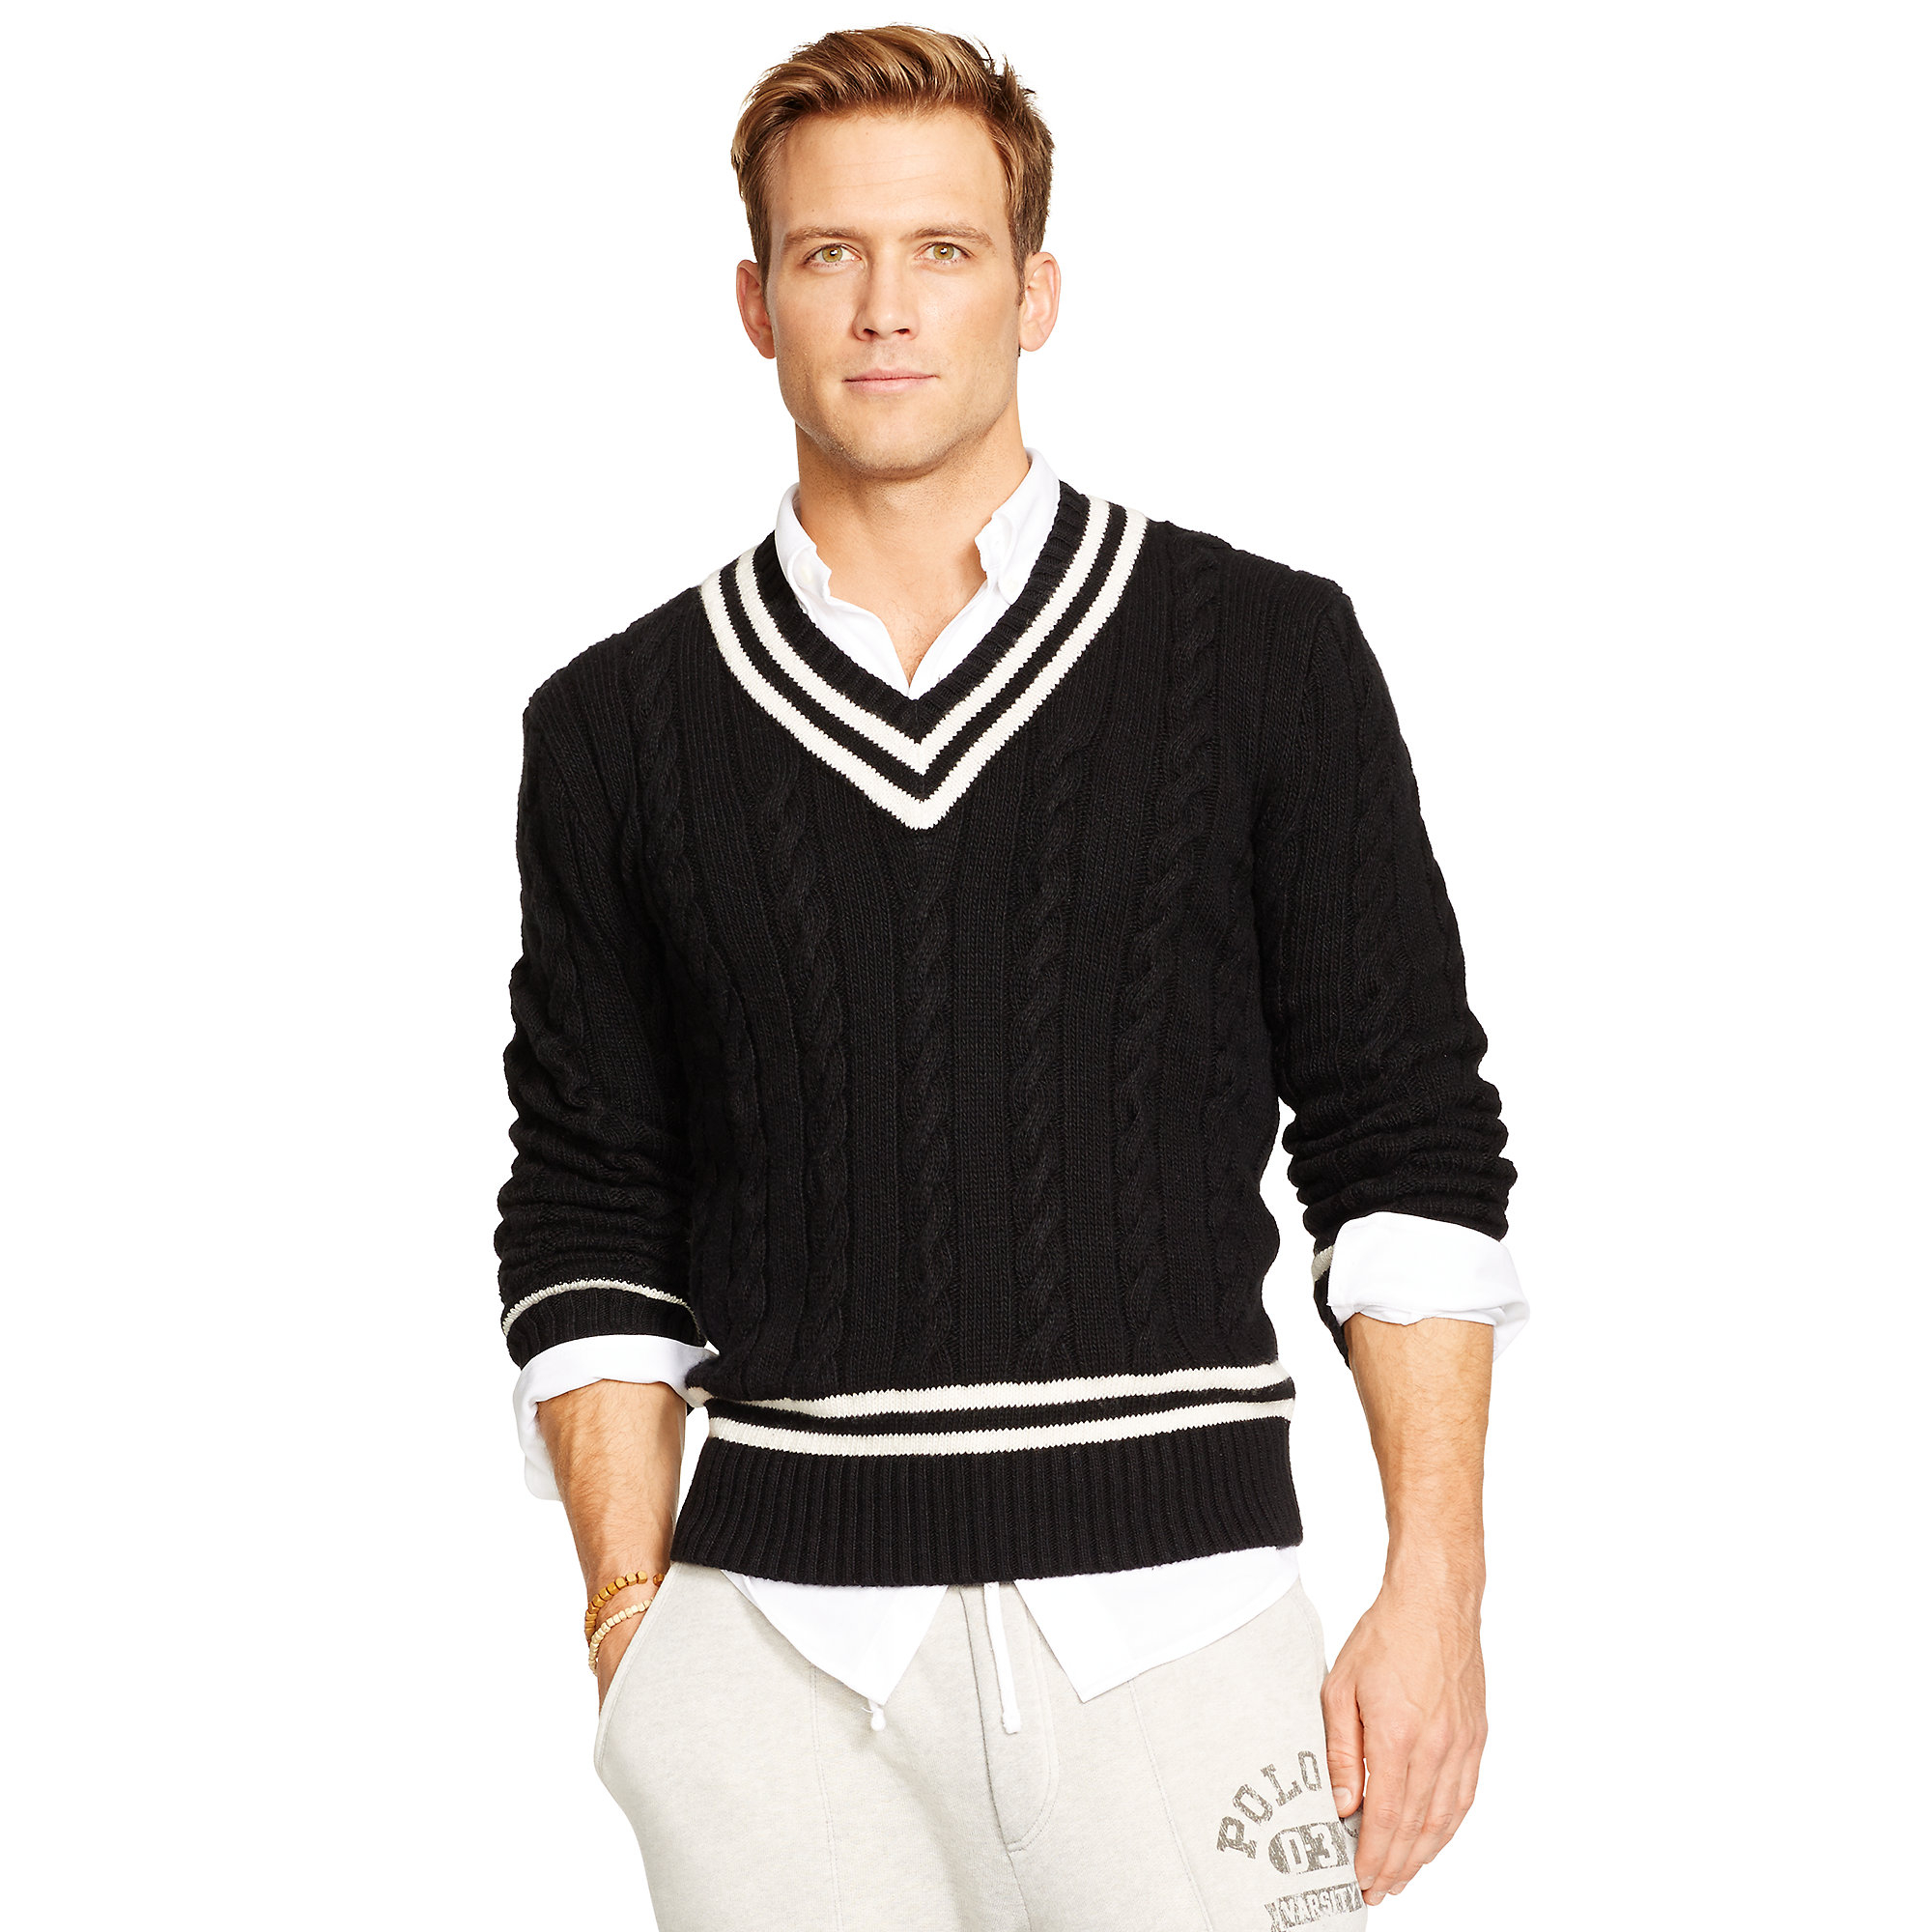 Lyst - Ralph Lauren Cotton-Blend Cricket Sweater in Black for Men